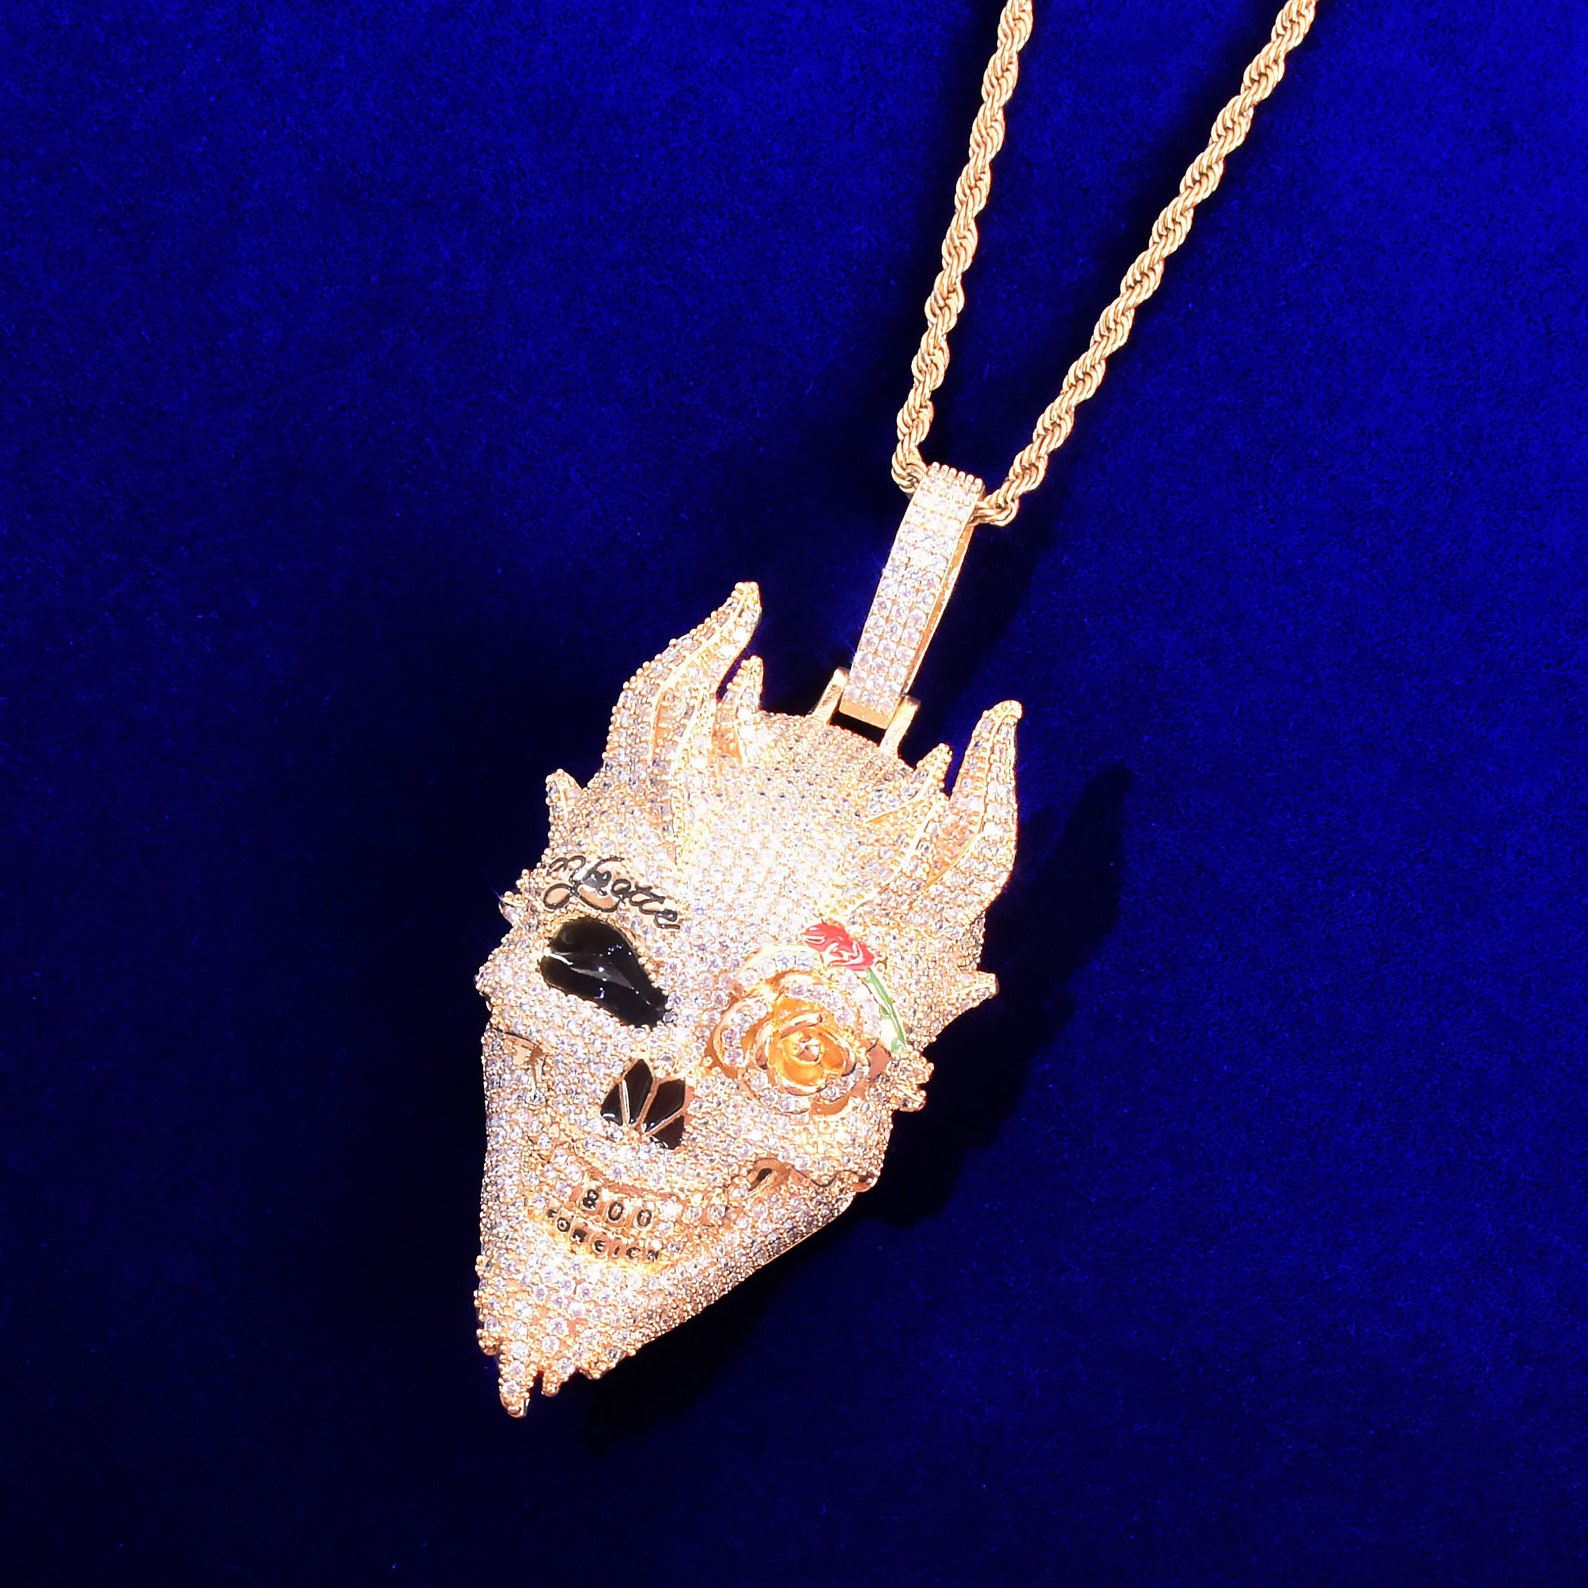 Gold demon skull pendant Iced out demon pendant Hip hop | Etsy